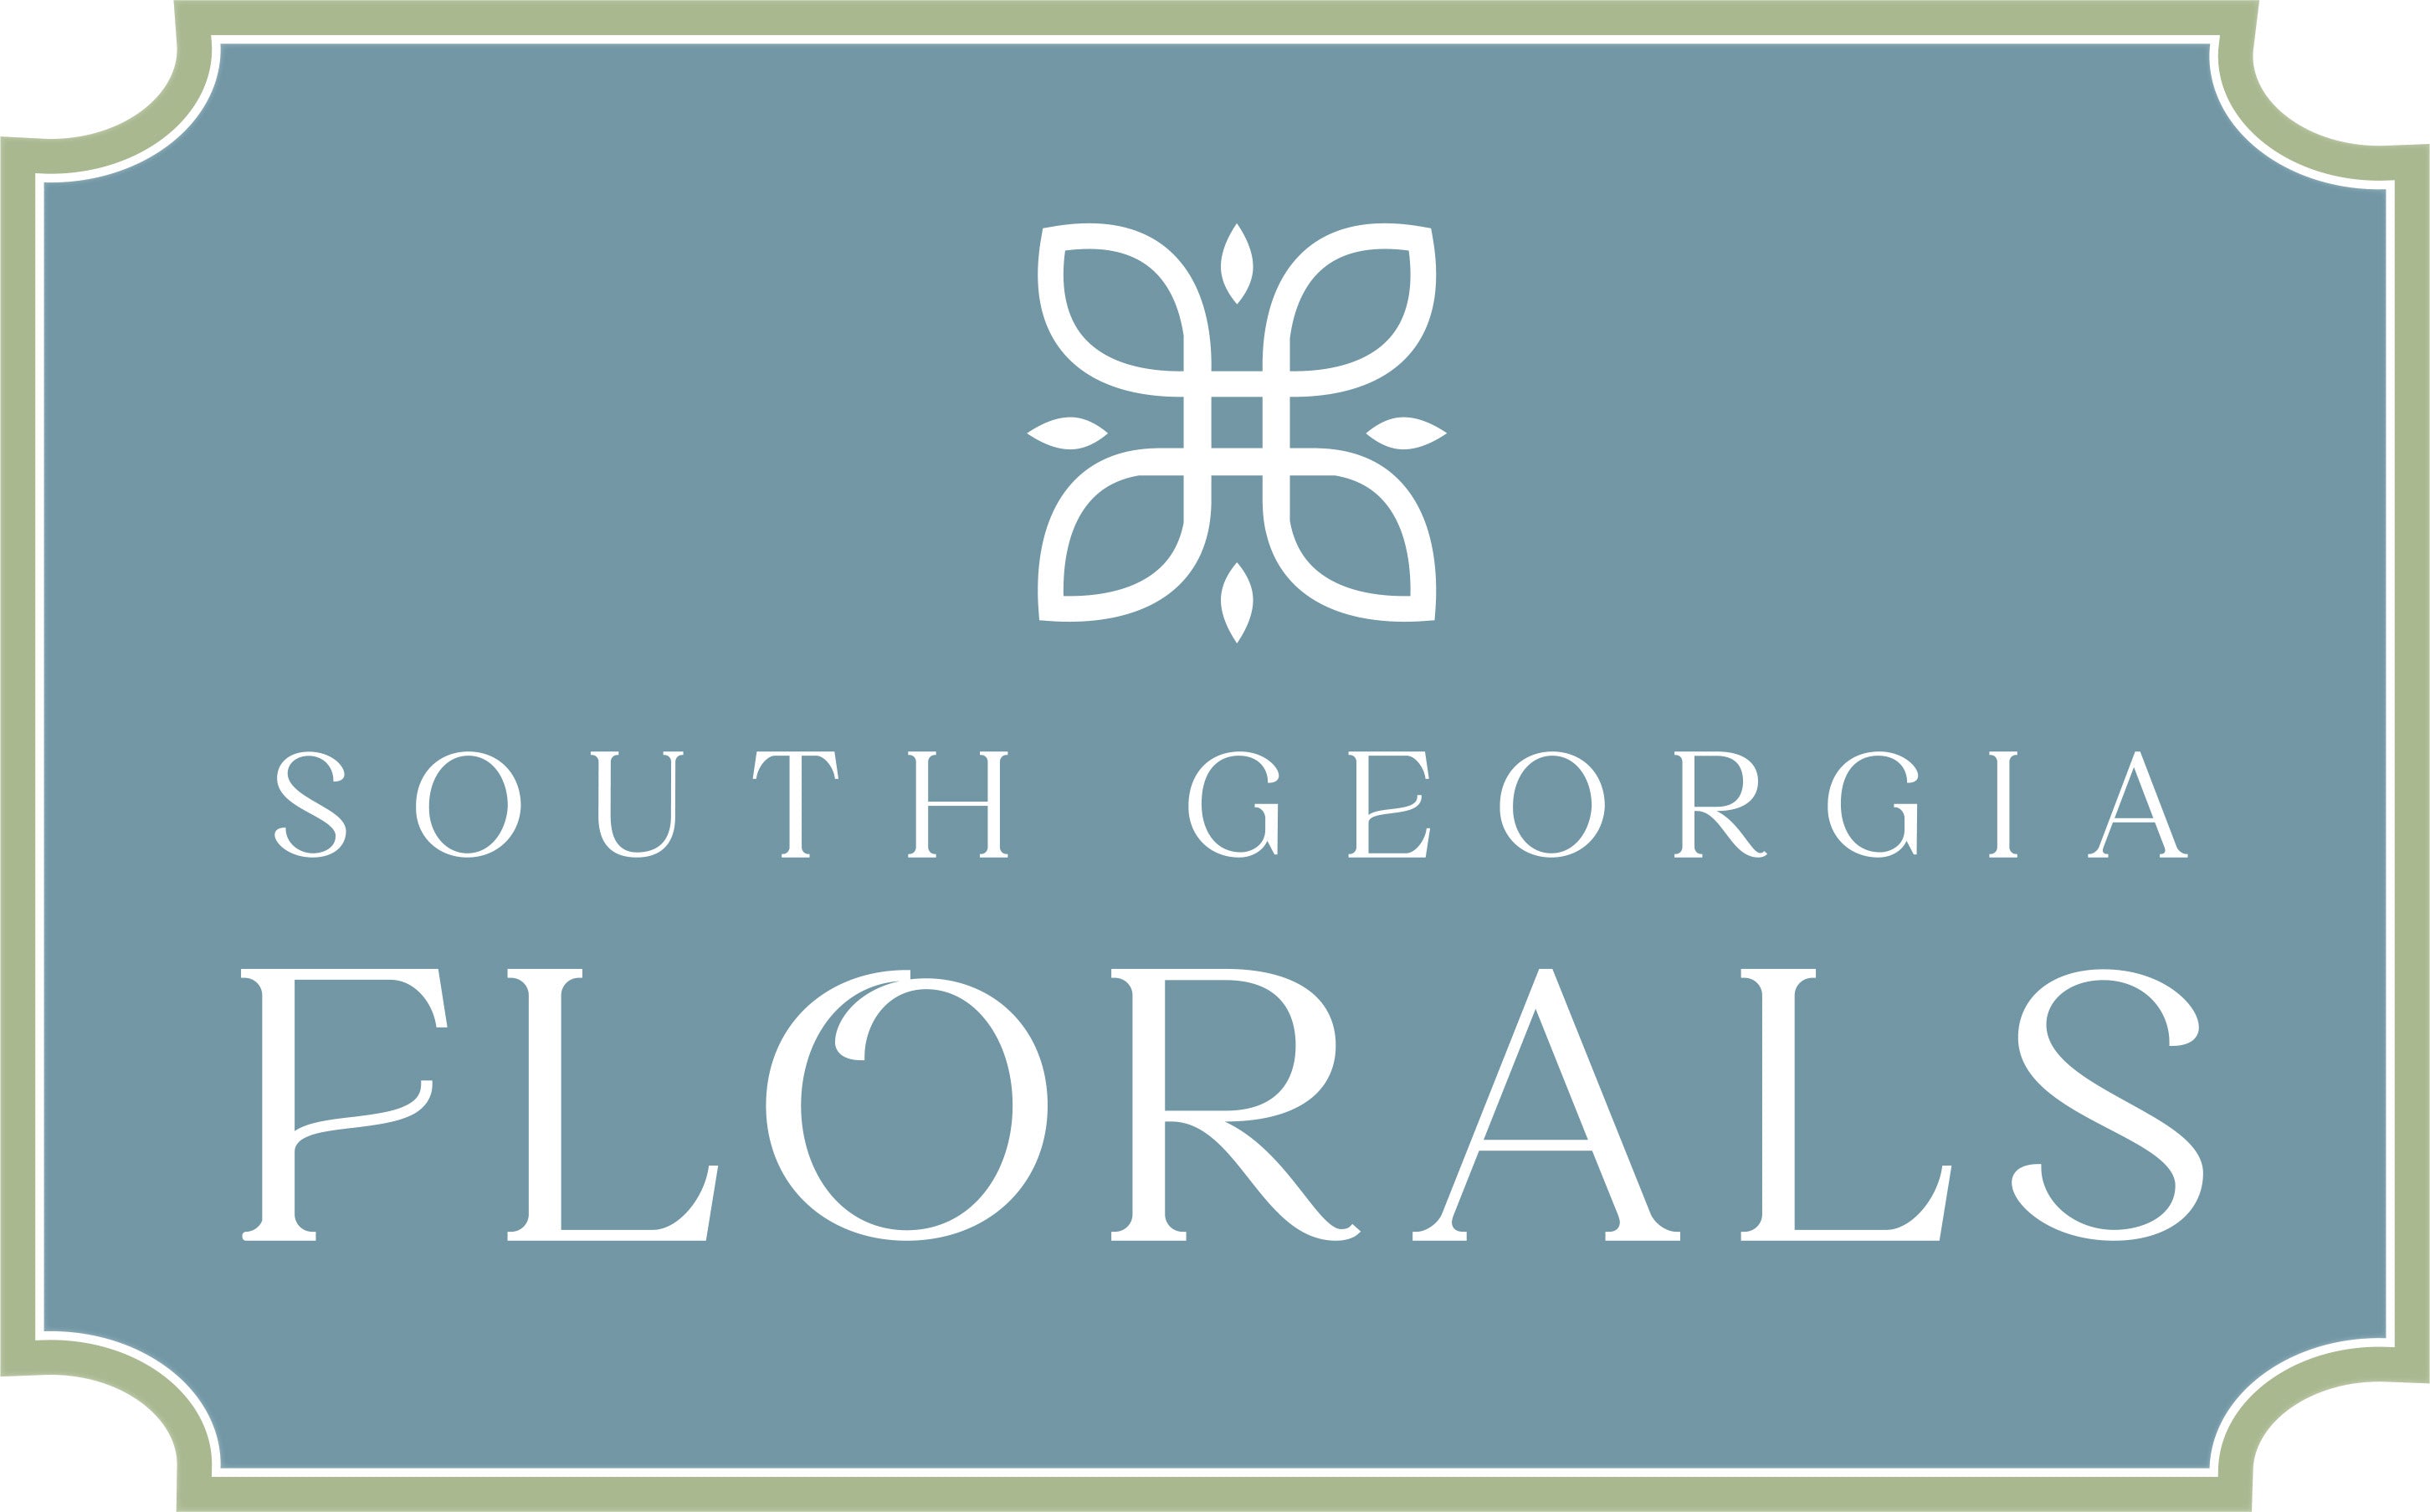 South Georgia Florals